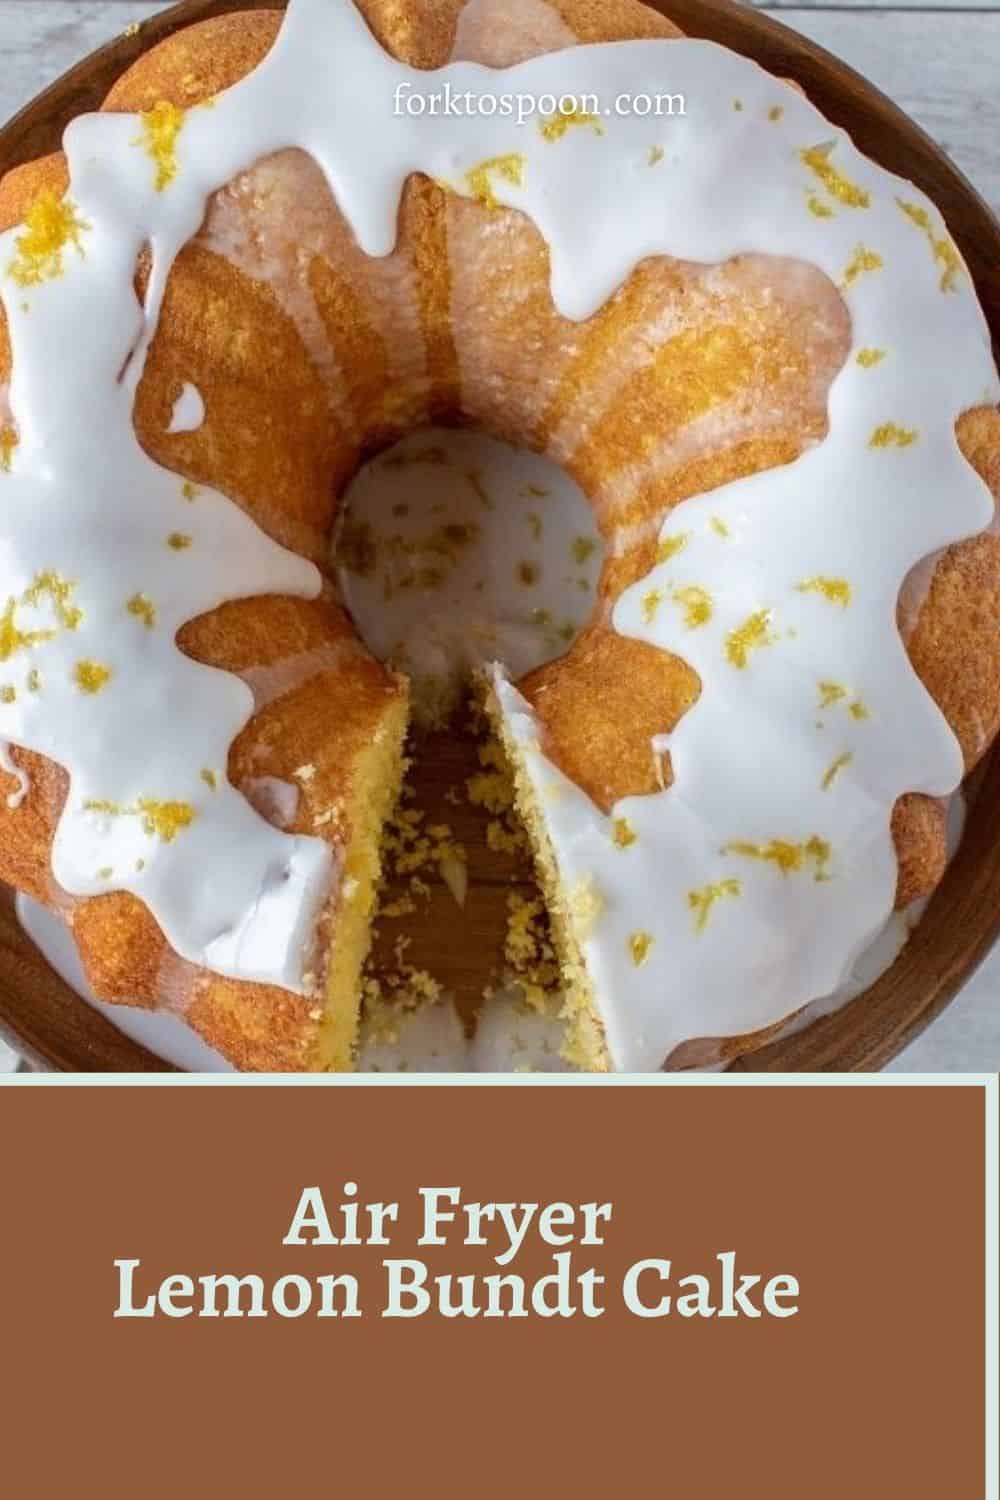 Air Fryer Lemon Bundt Cake